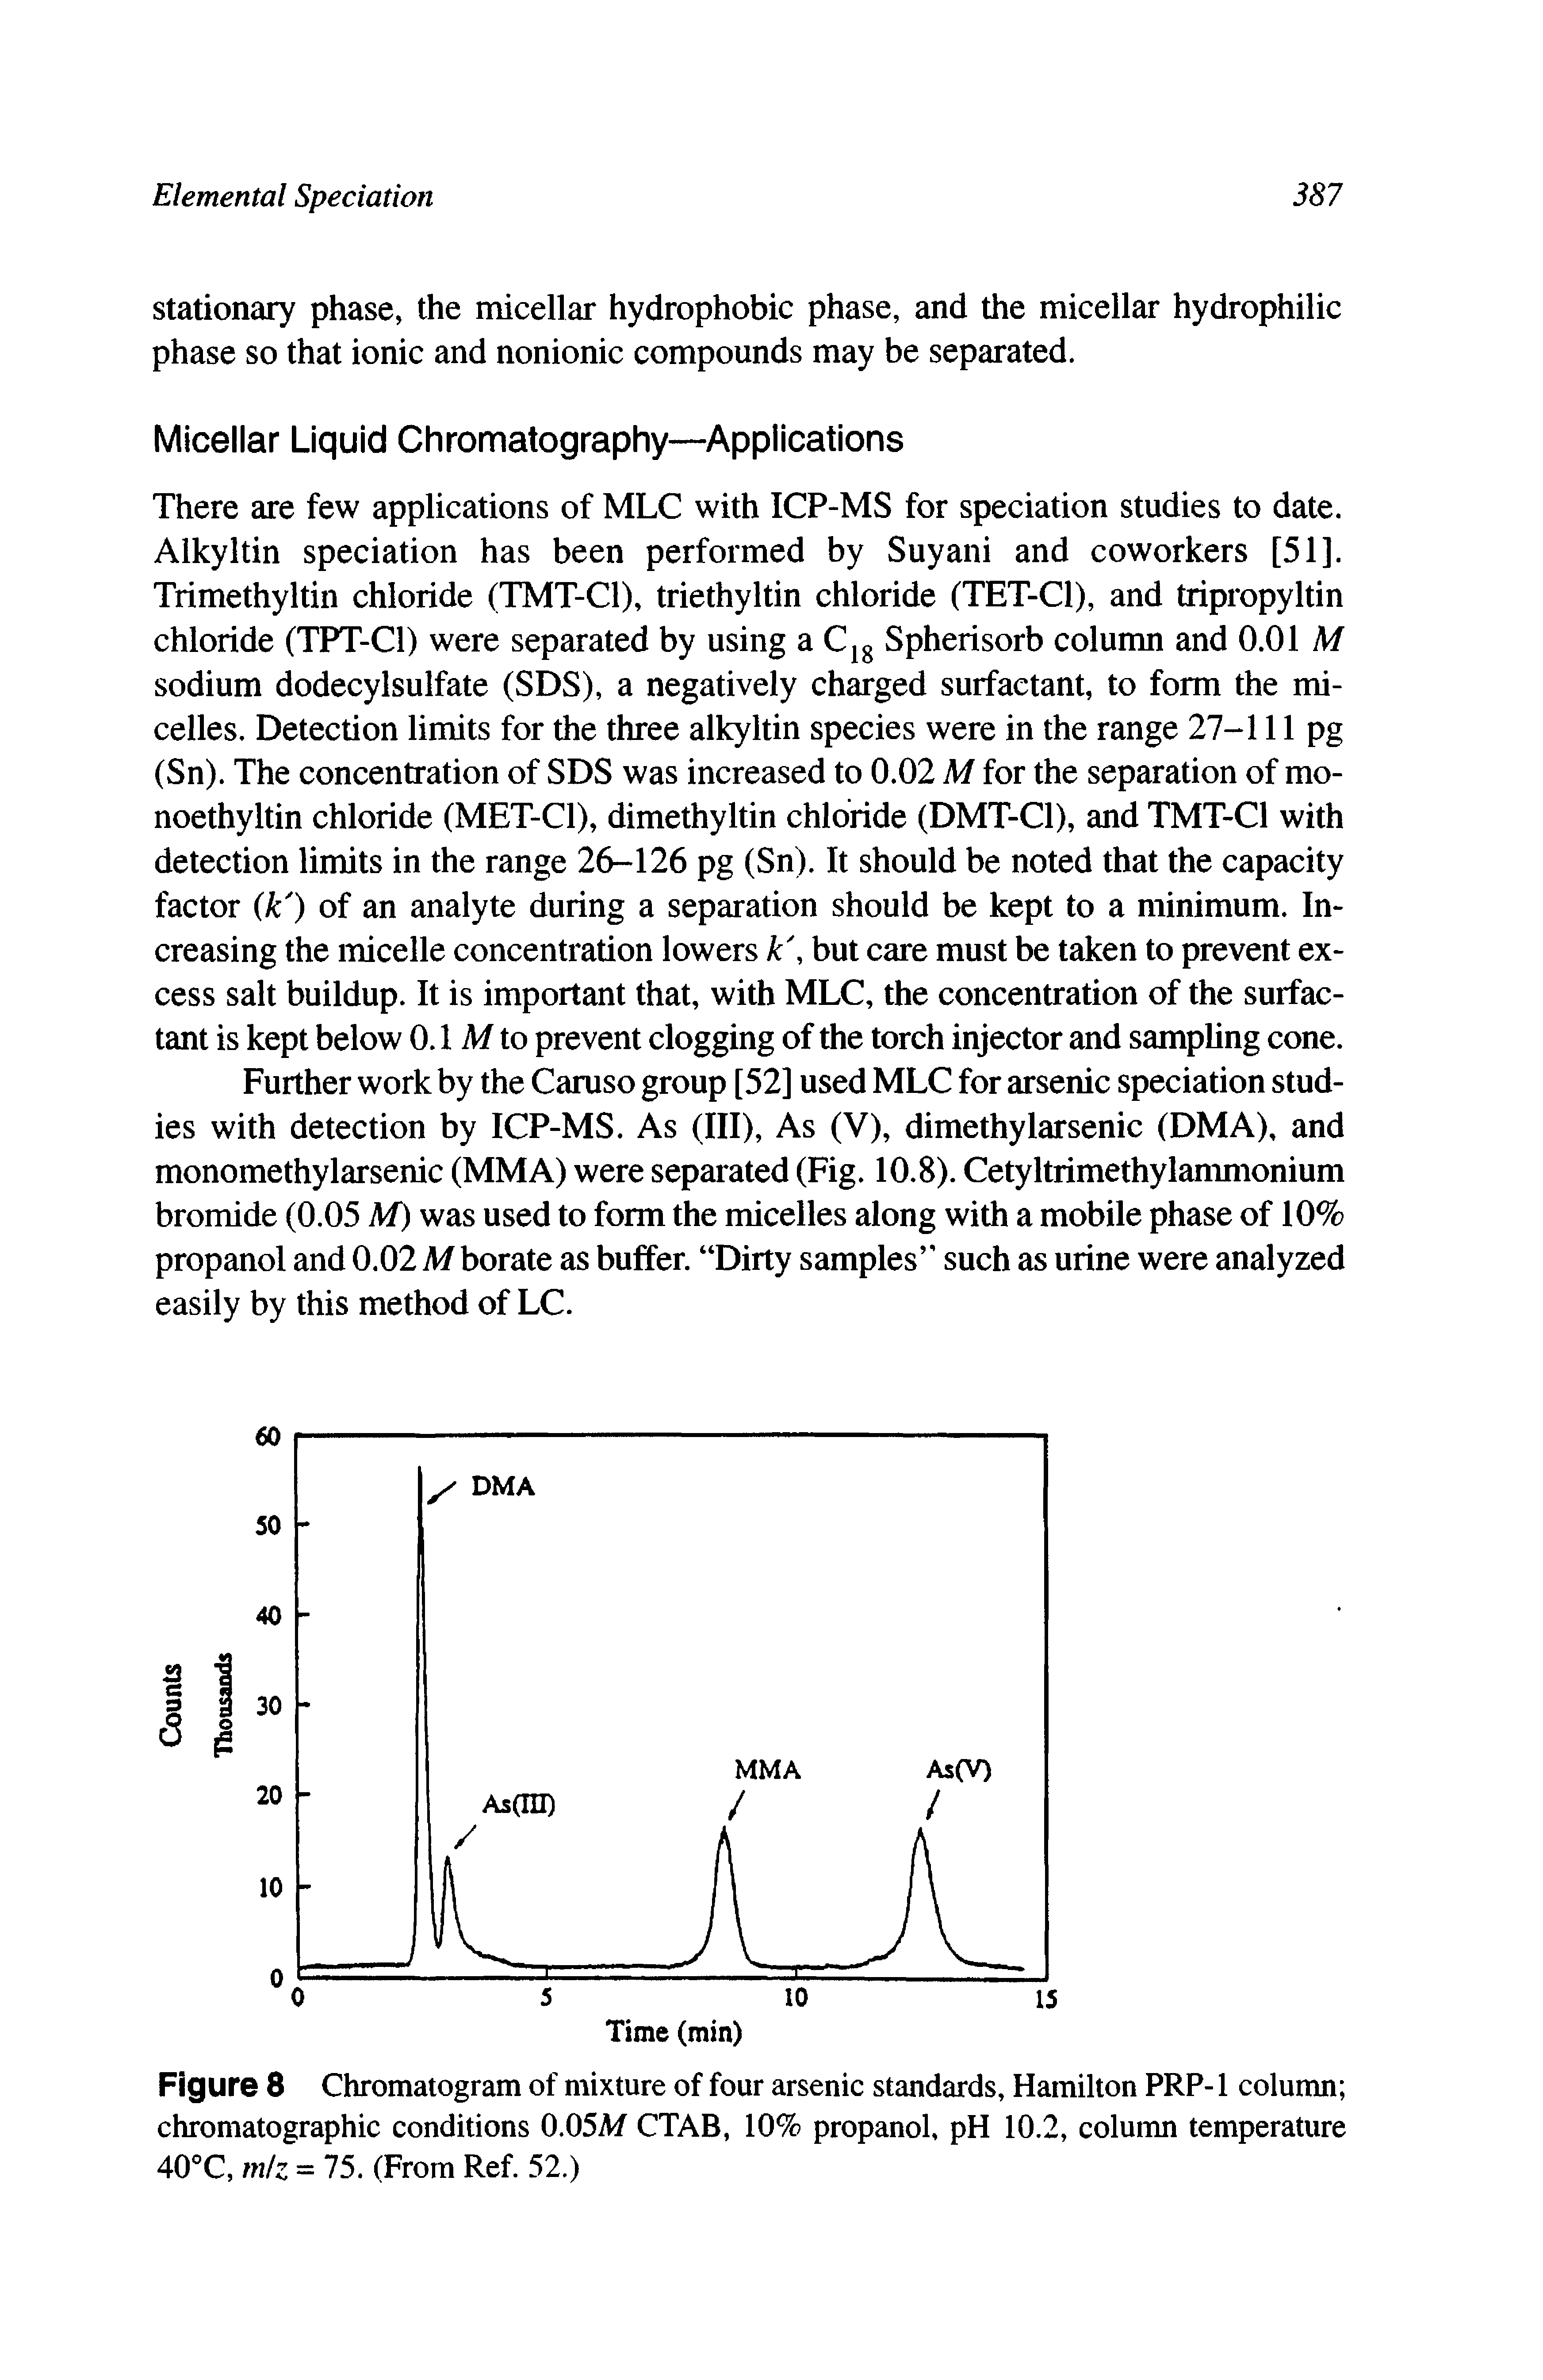 Figure 8 Chromatogram of mixture of four arsenic standards, Hamilton PRP-1 column chromatographic conditions 0.05Af CTAB, 10% propanol, pH 10.2, column temperature 40°C, mlz = 75. (From Ref. 52.)...